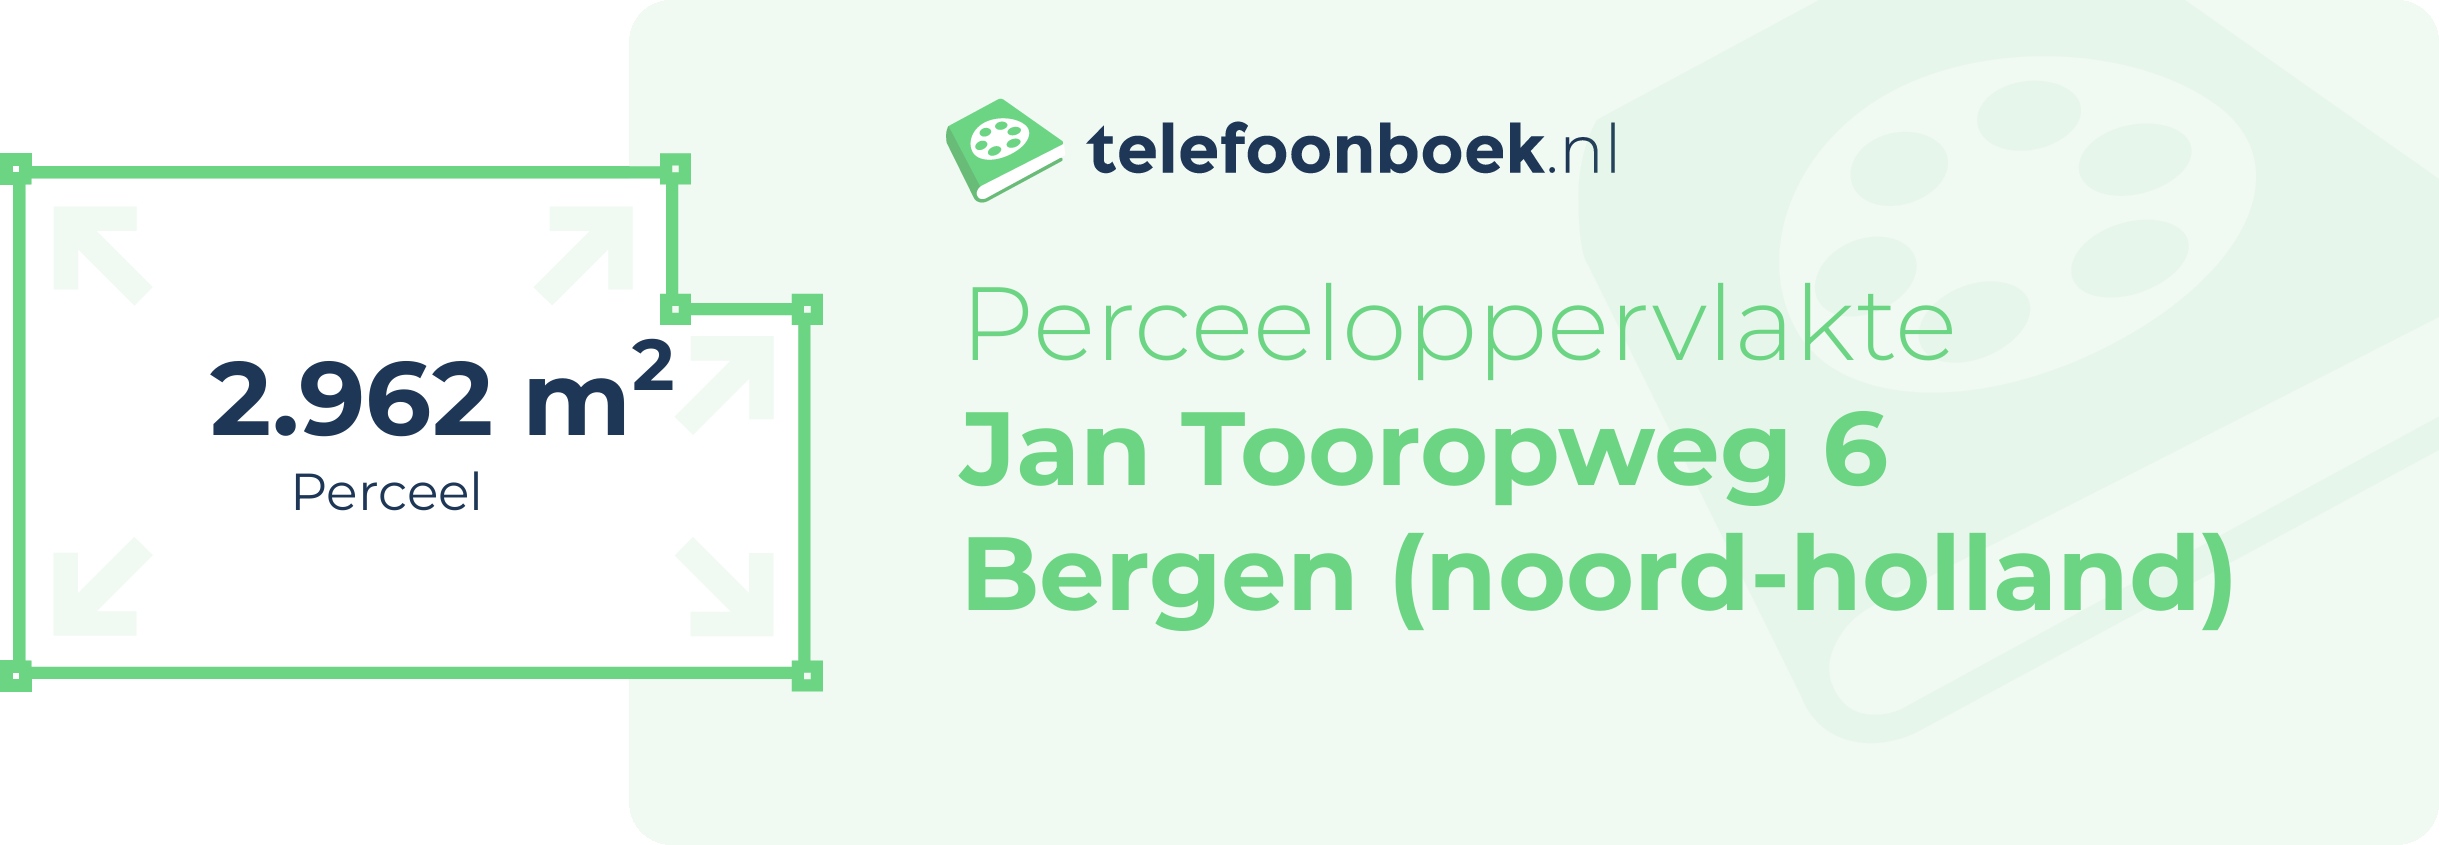 Perceeloppervlakte Jan Tooropweg 6 Bergen (Noord-Holland)